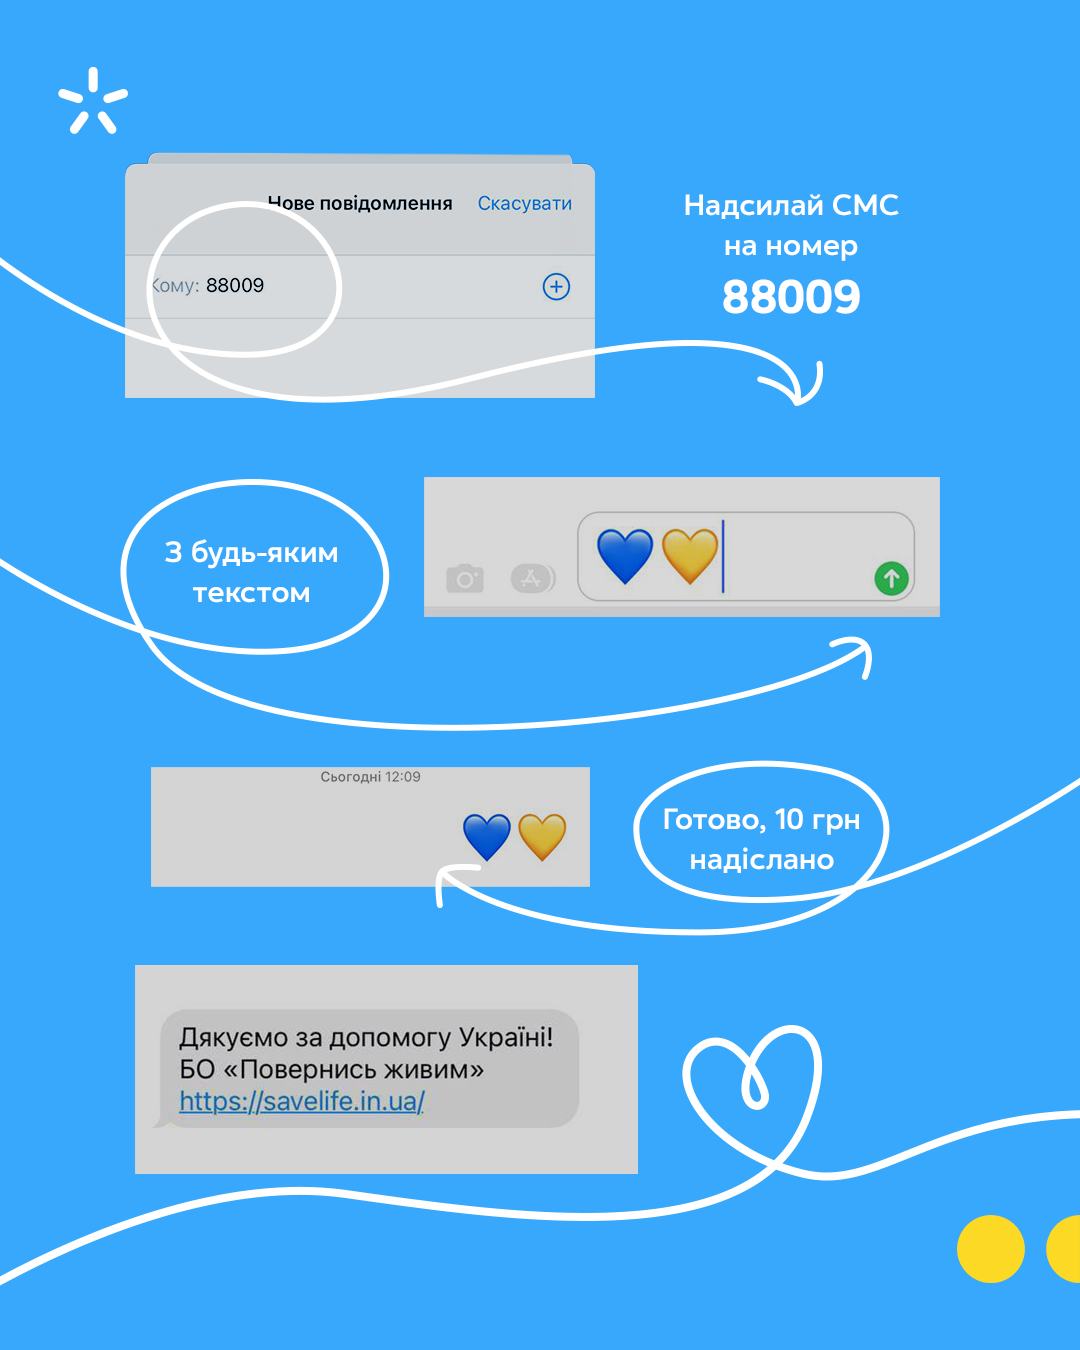 Kyivstar subscribers raised more than 1.2 million UAH to help the Ukrainian army